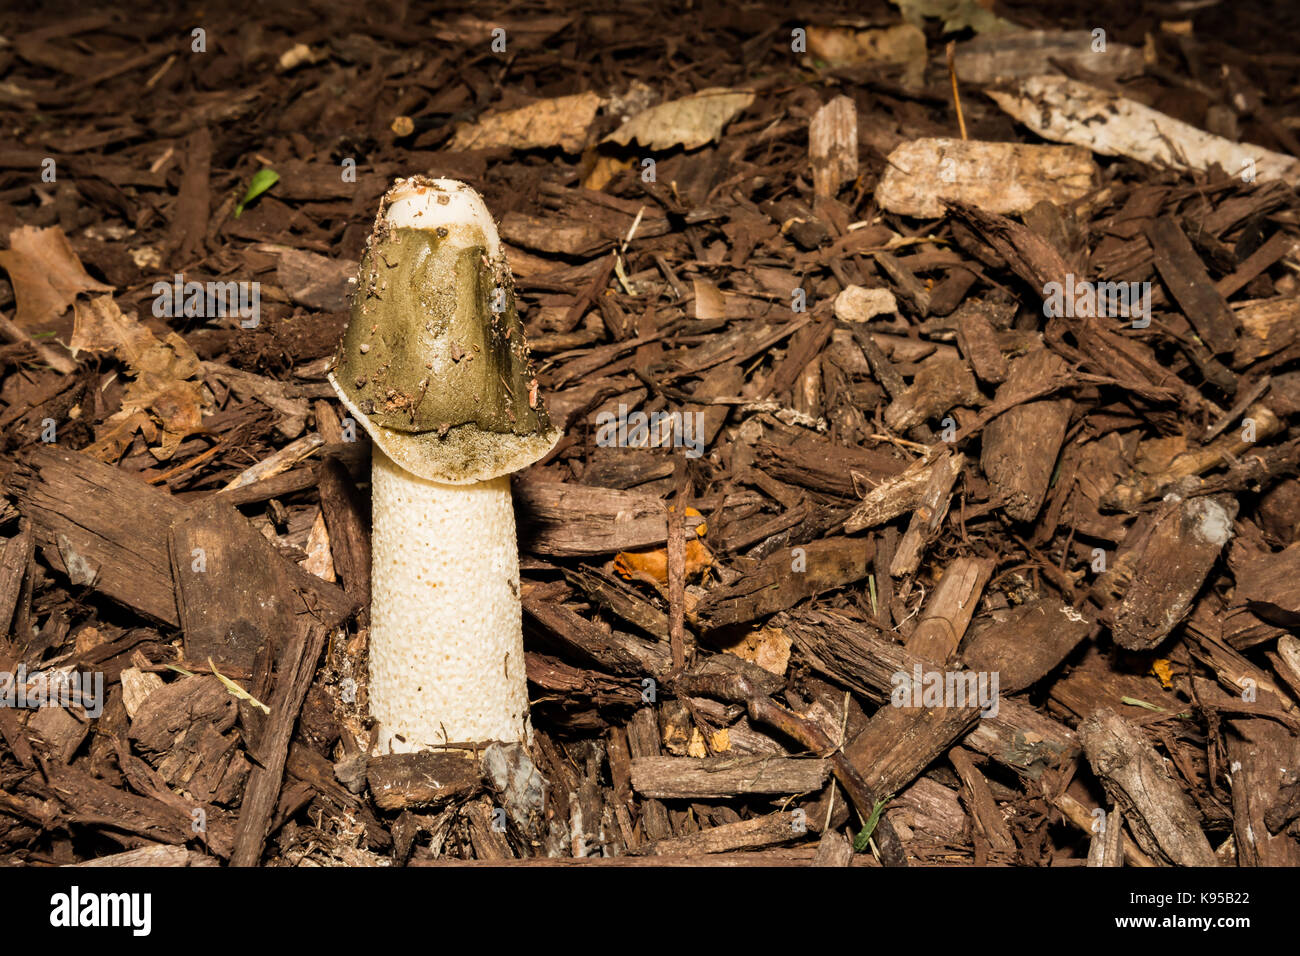 A Dog Stinkhorn Mushroom growing in mulch in the garden. Stock Photo